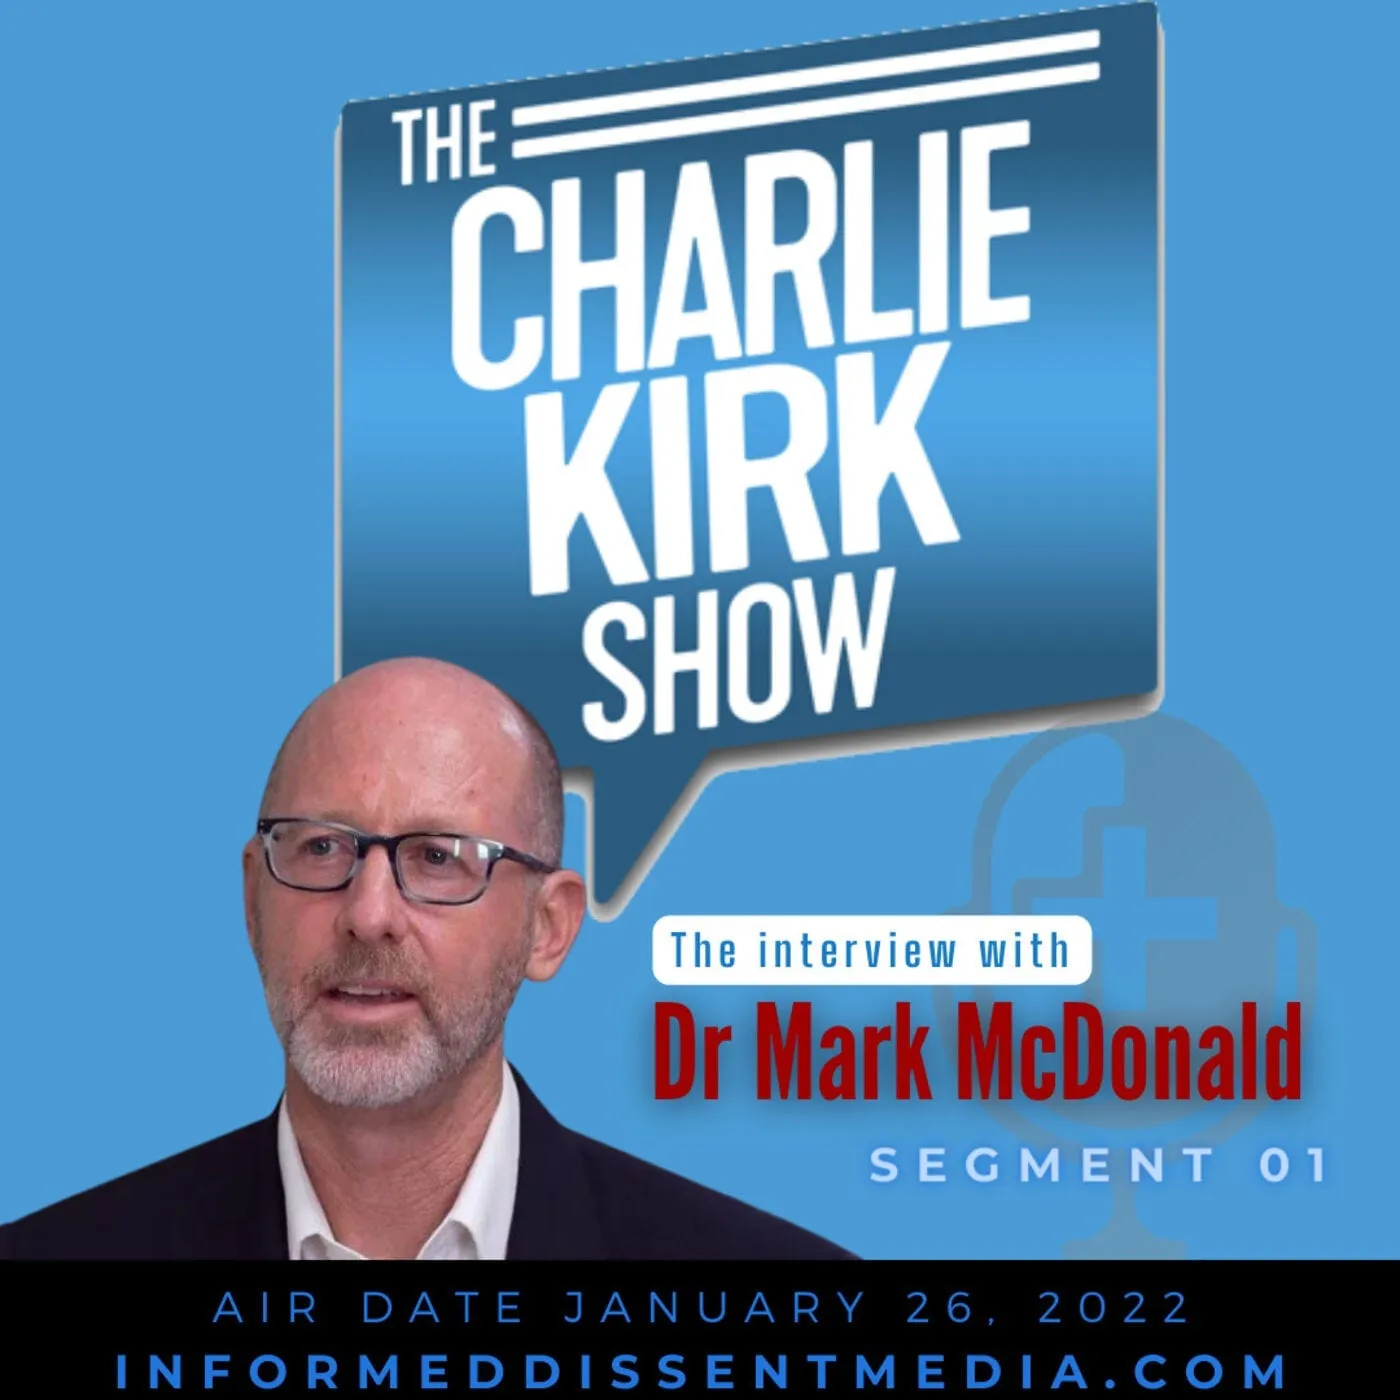 IDM - Dr Mark McDonald on The Charlie Kirk Show - 2022-01-26 - Segment 01